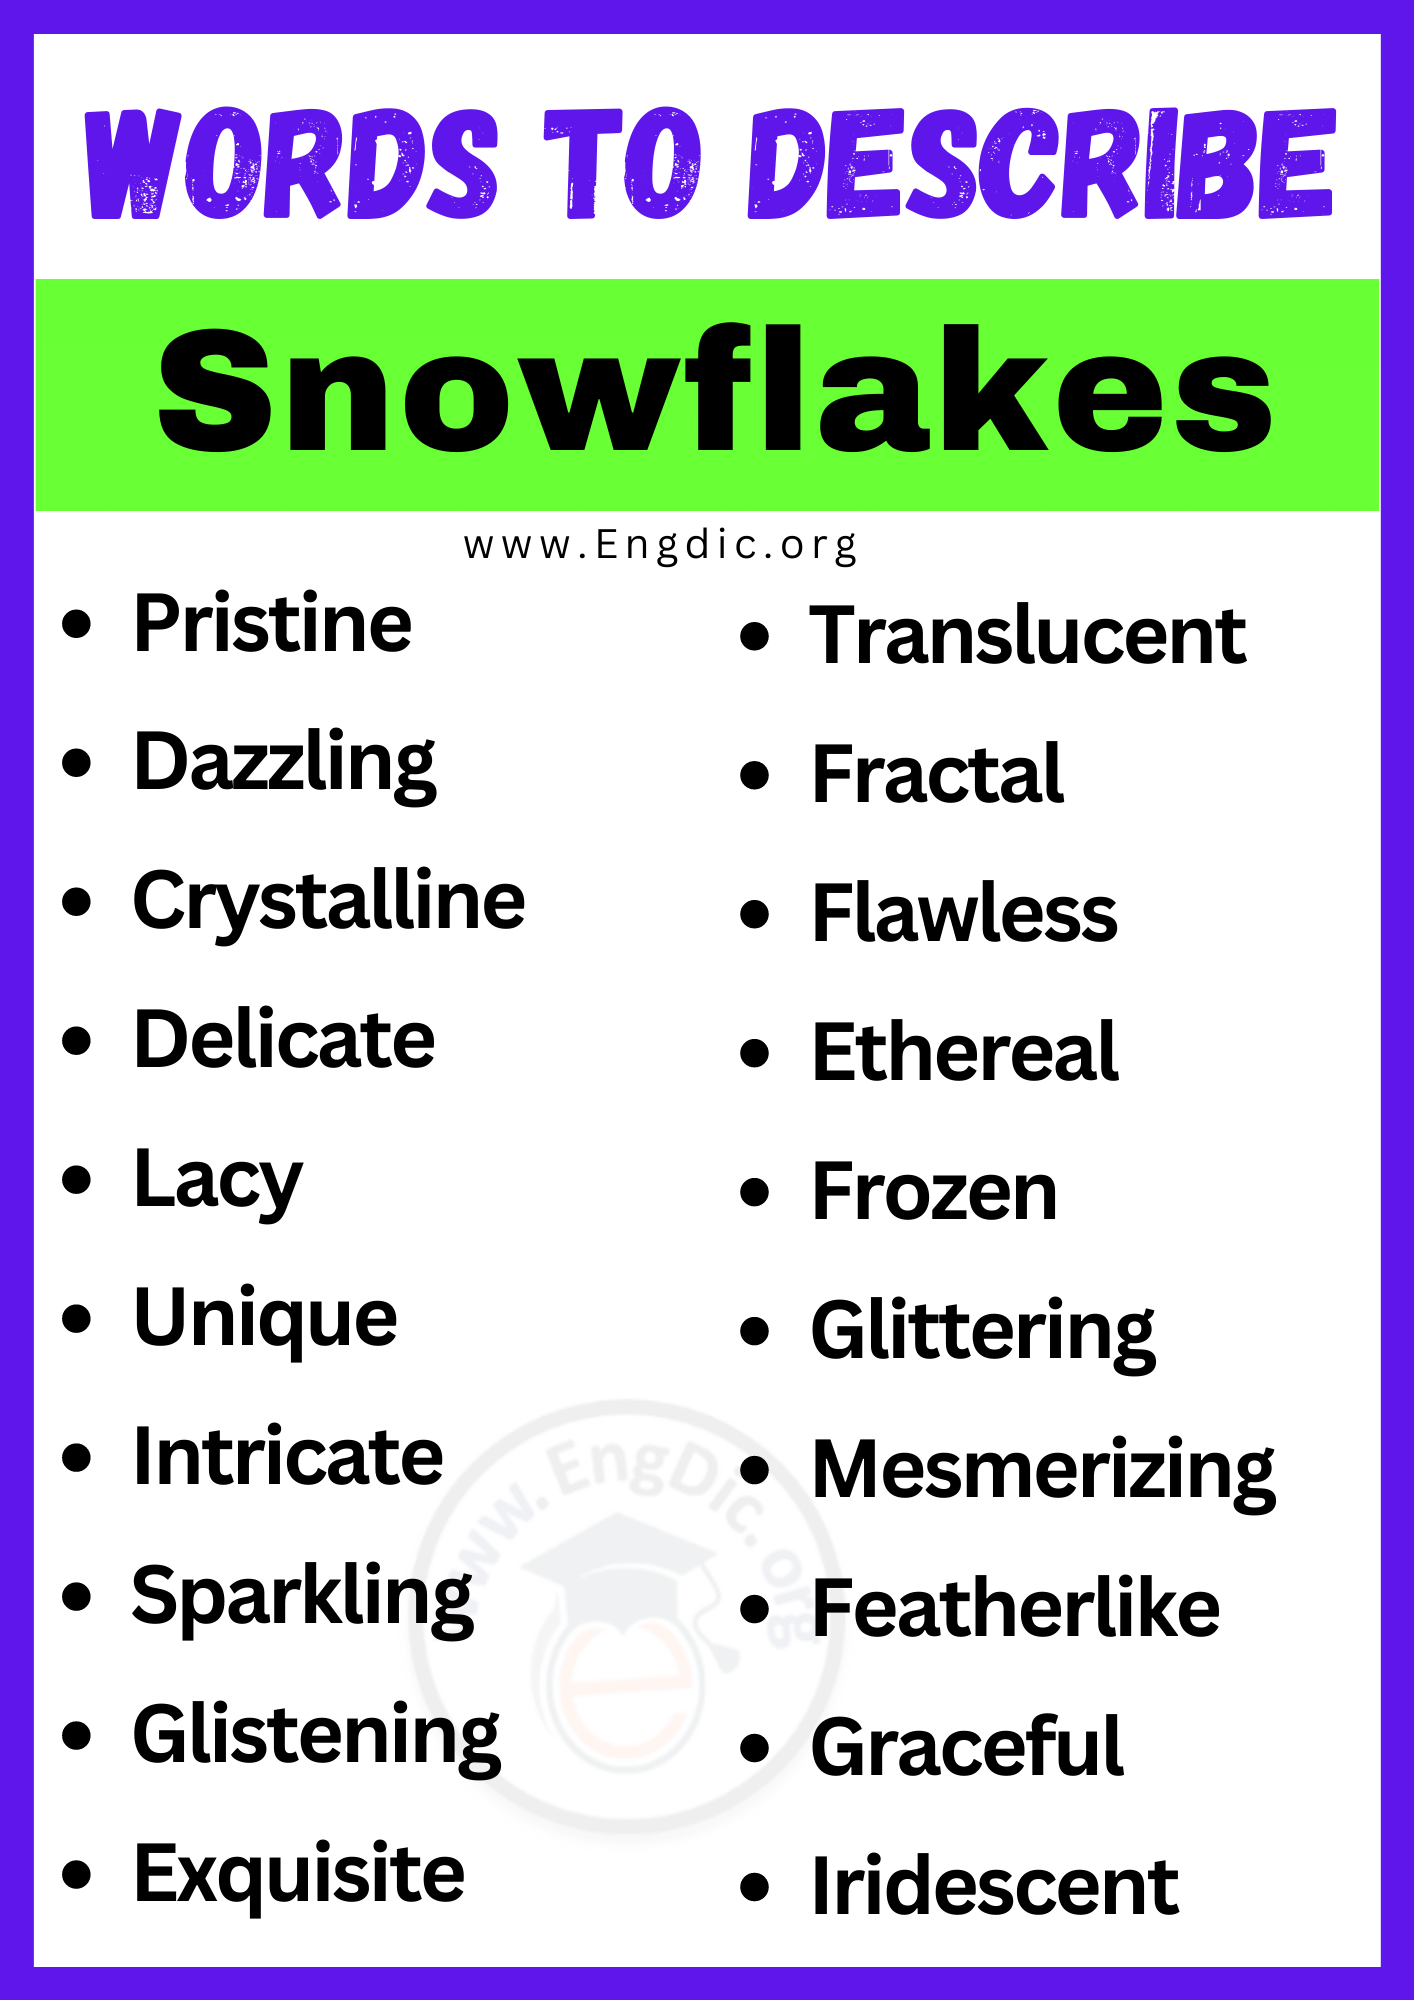 Words to Describe Snowflakes